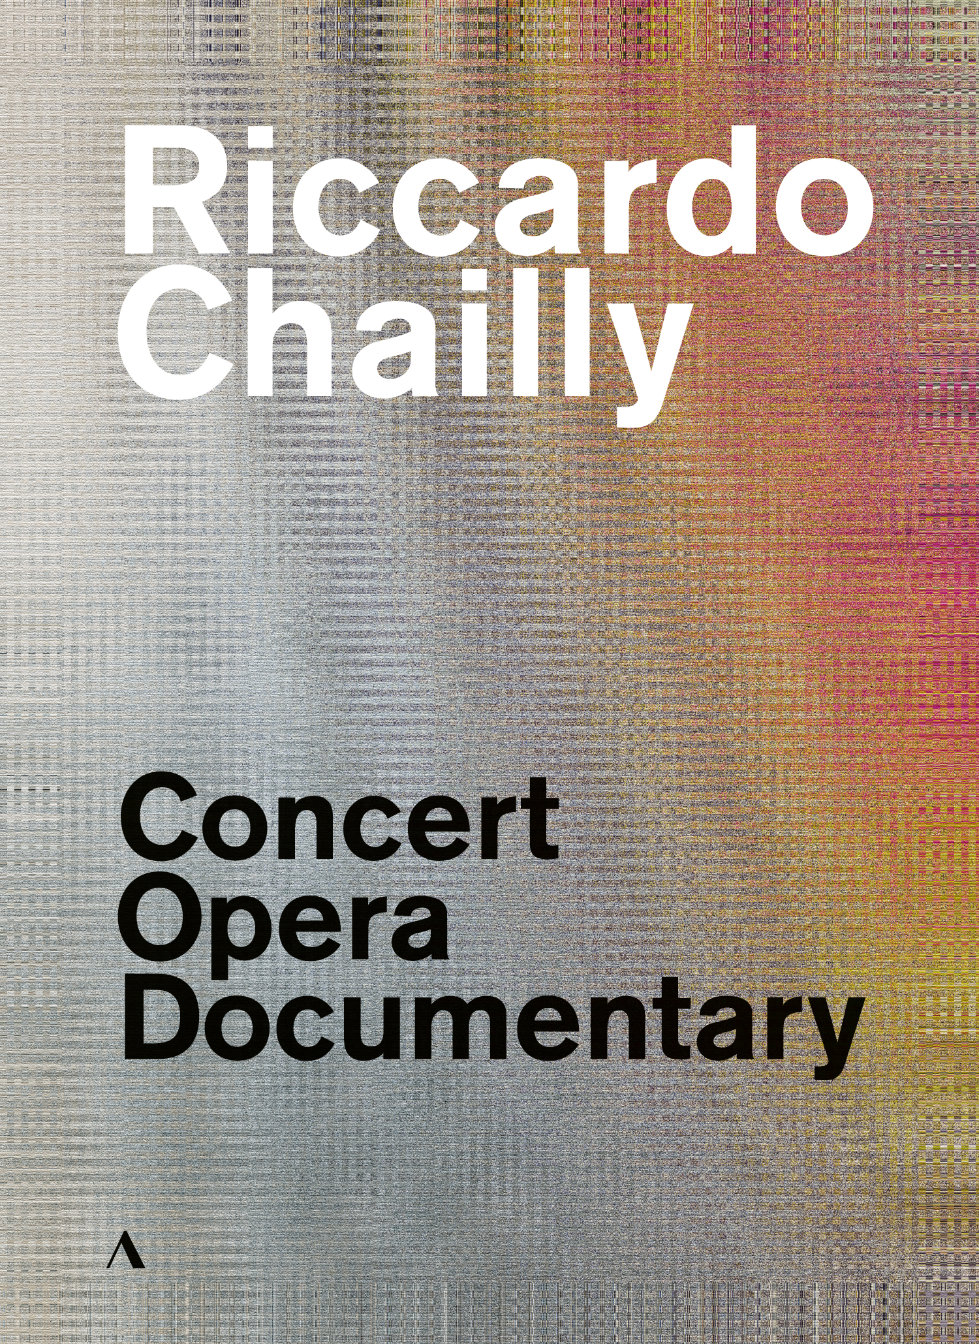 Chailly　Documentary　Opera　musik　Riccardo　DVD)　Concert　(4